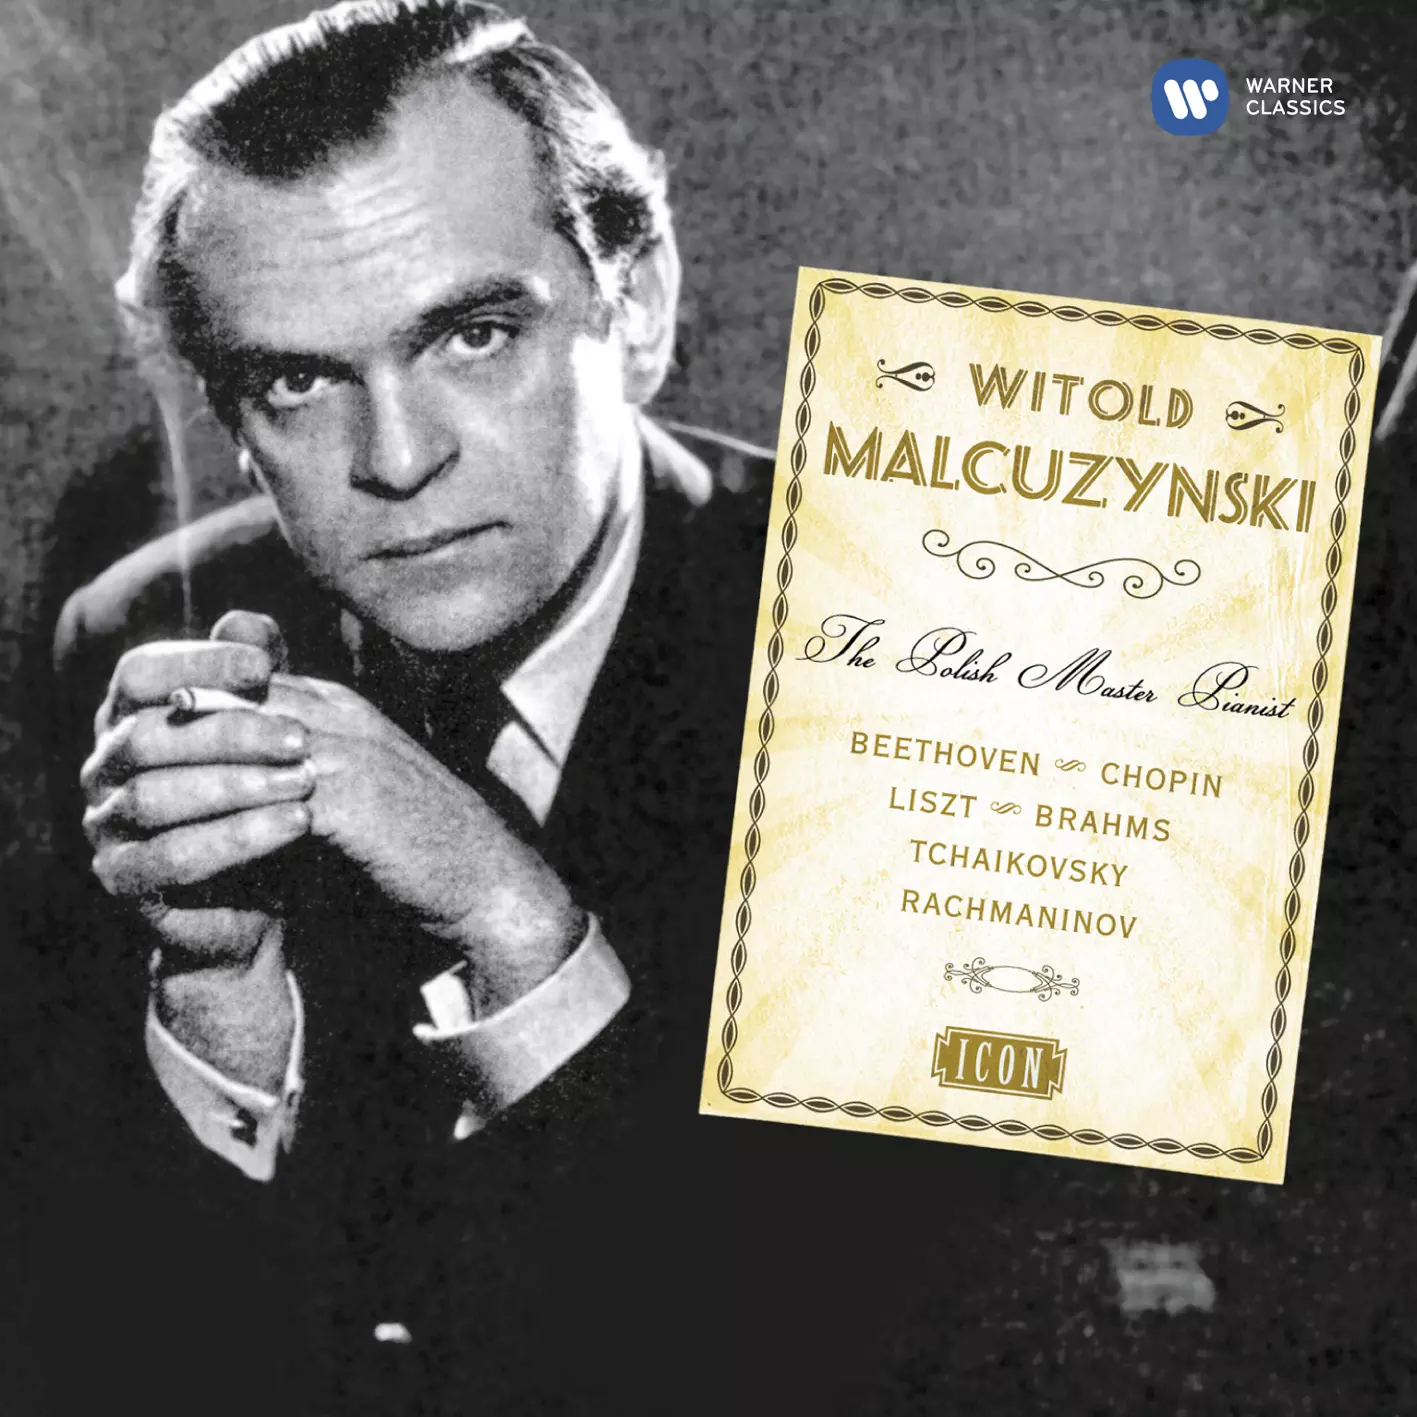 Witold Malcuzynski: The Polish Master Pianist